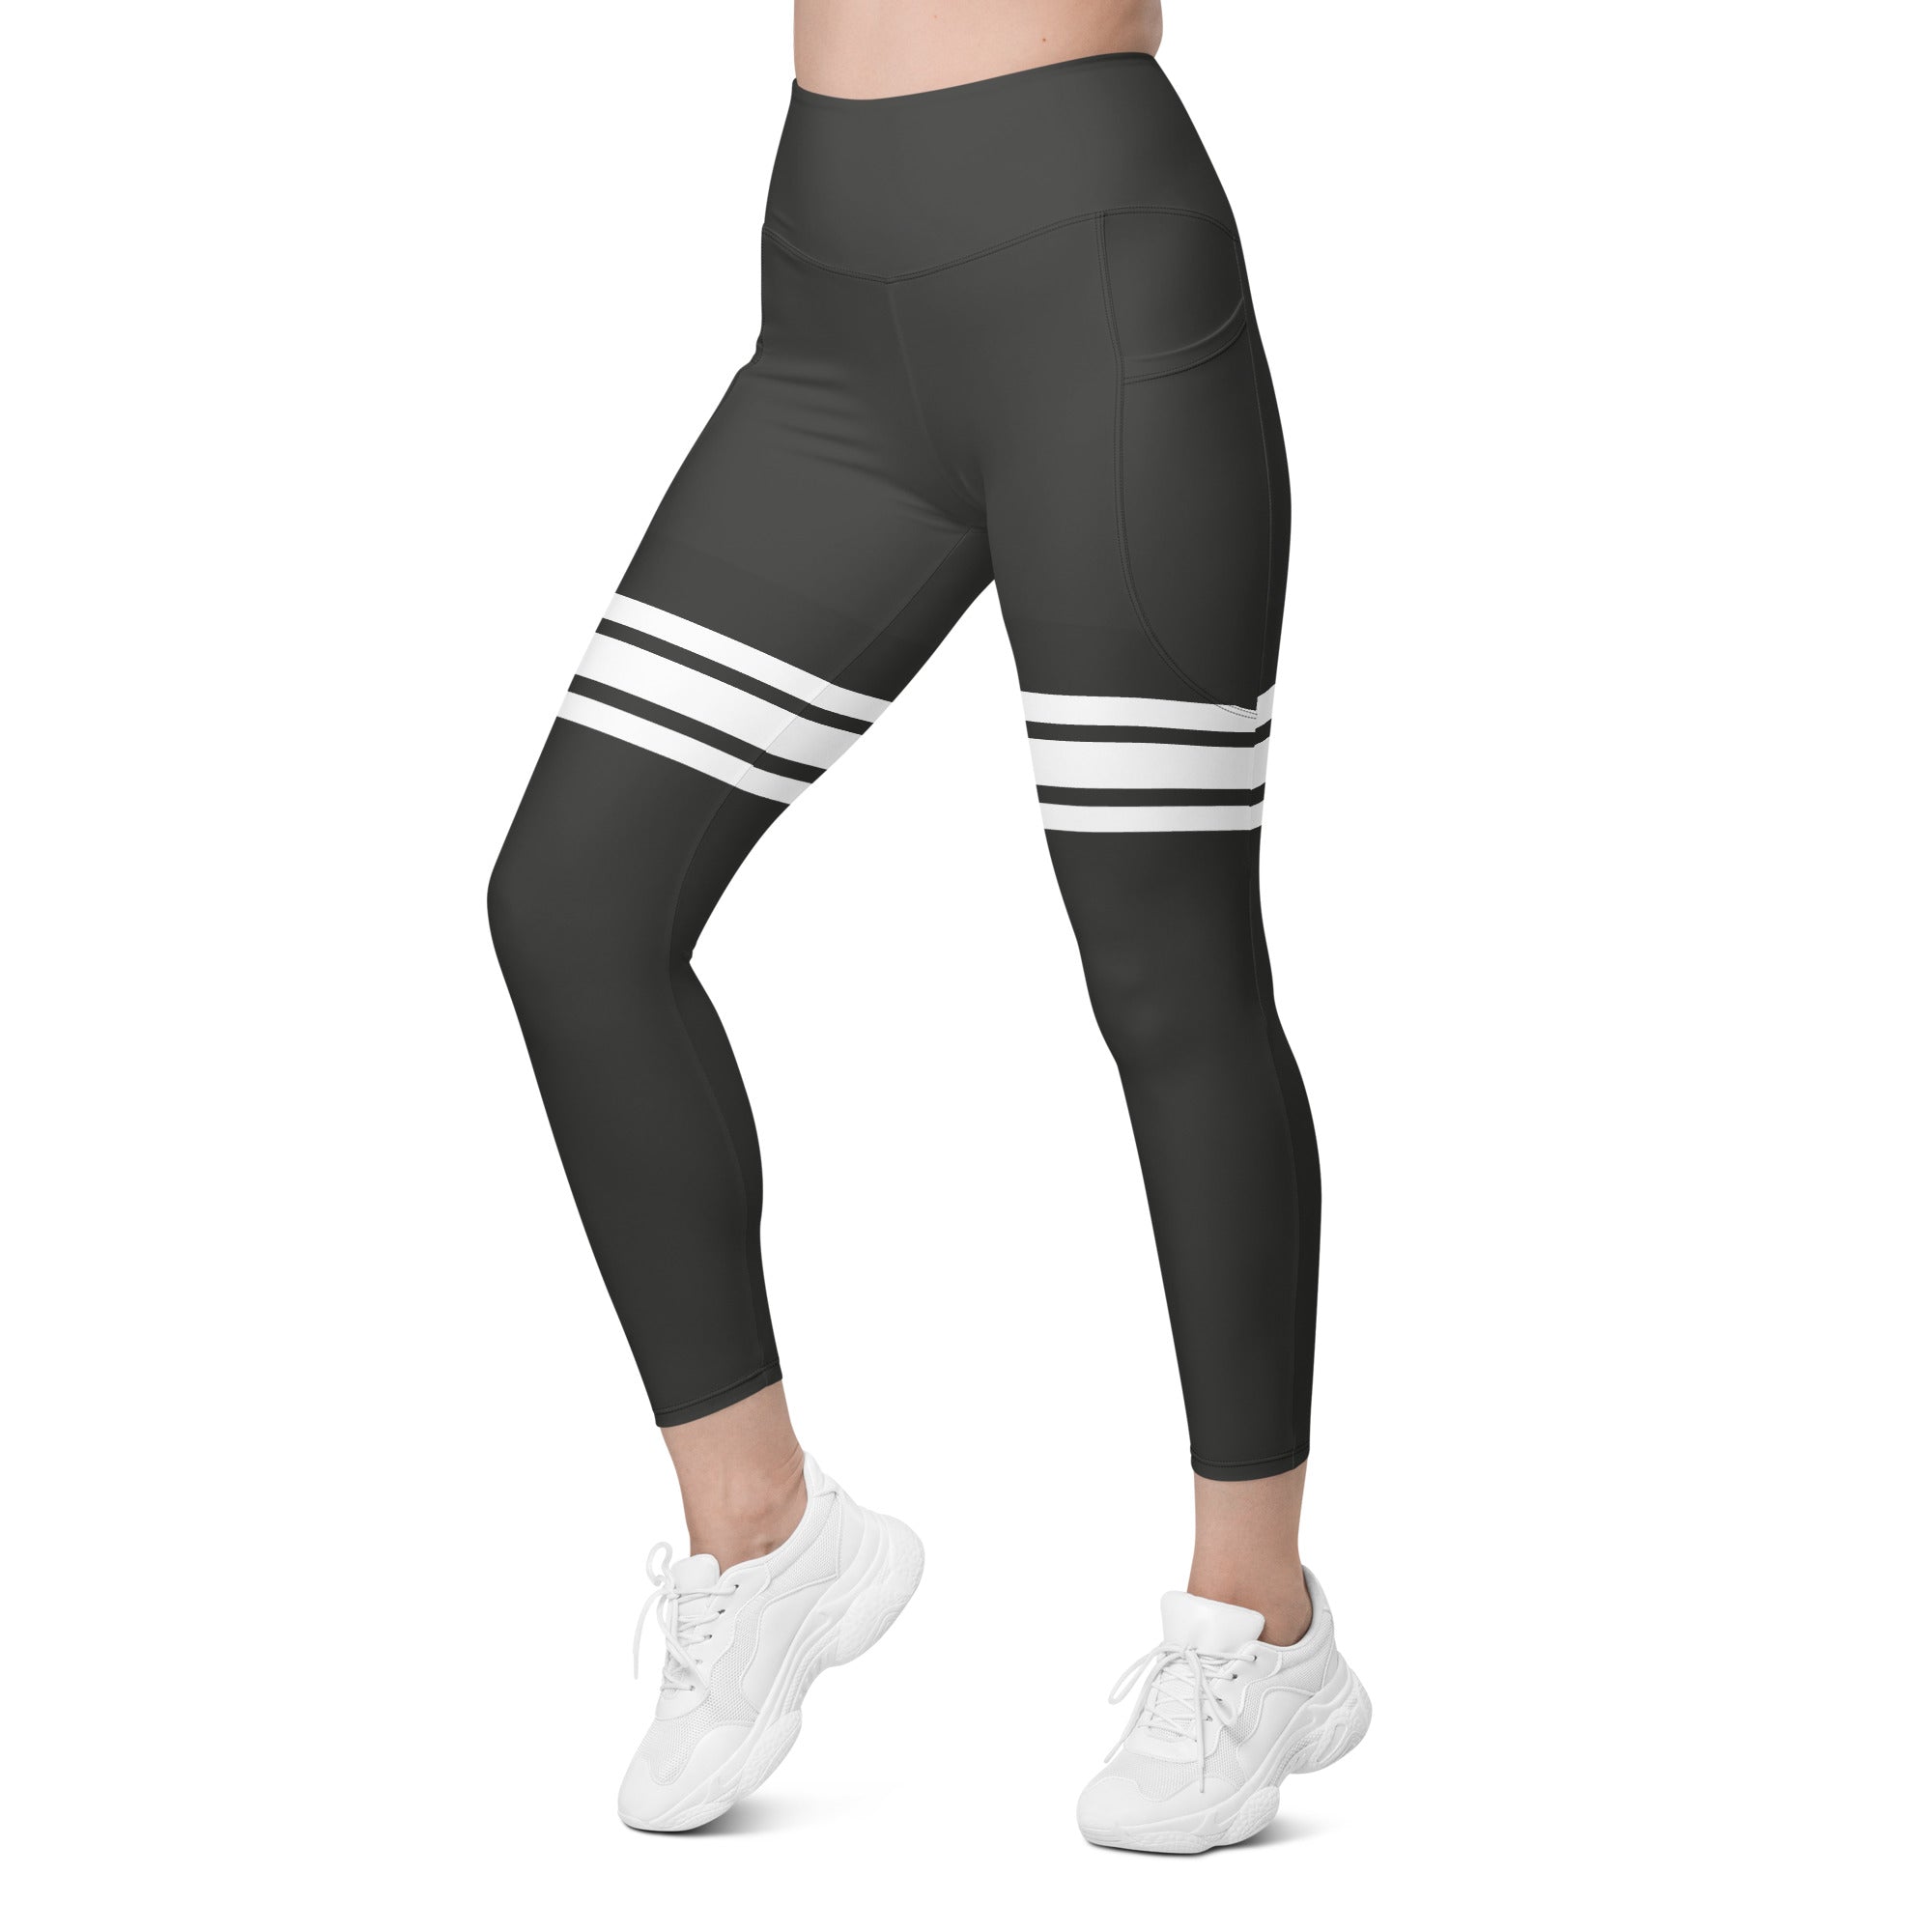 High waist women’s leggings for fashion-forward looks-girlstronginc.com